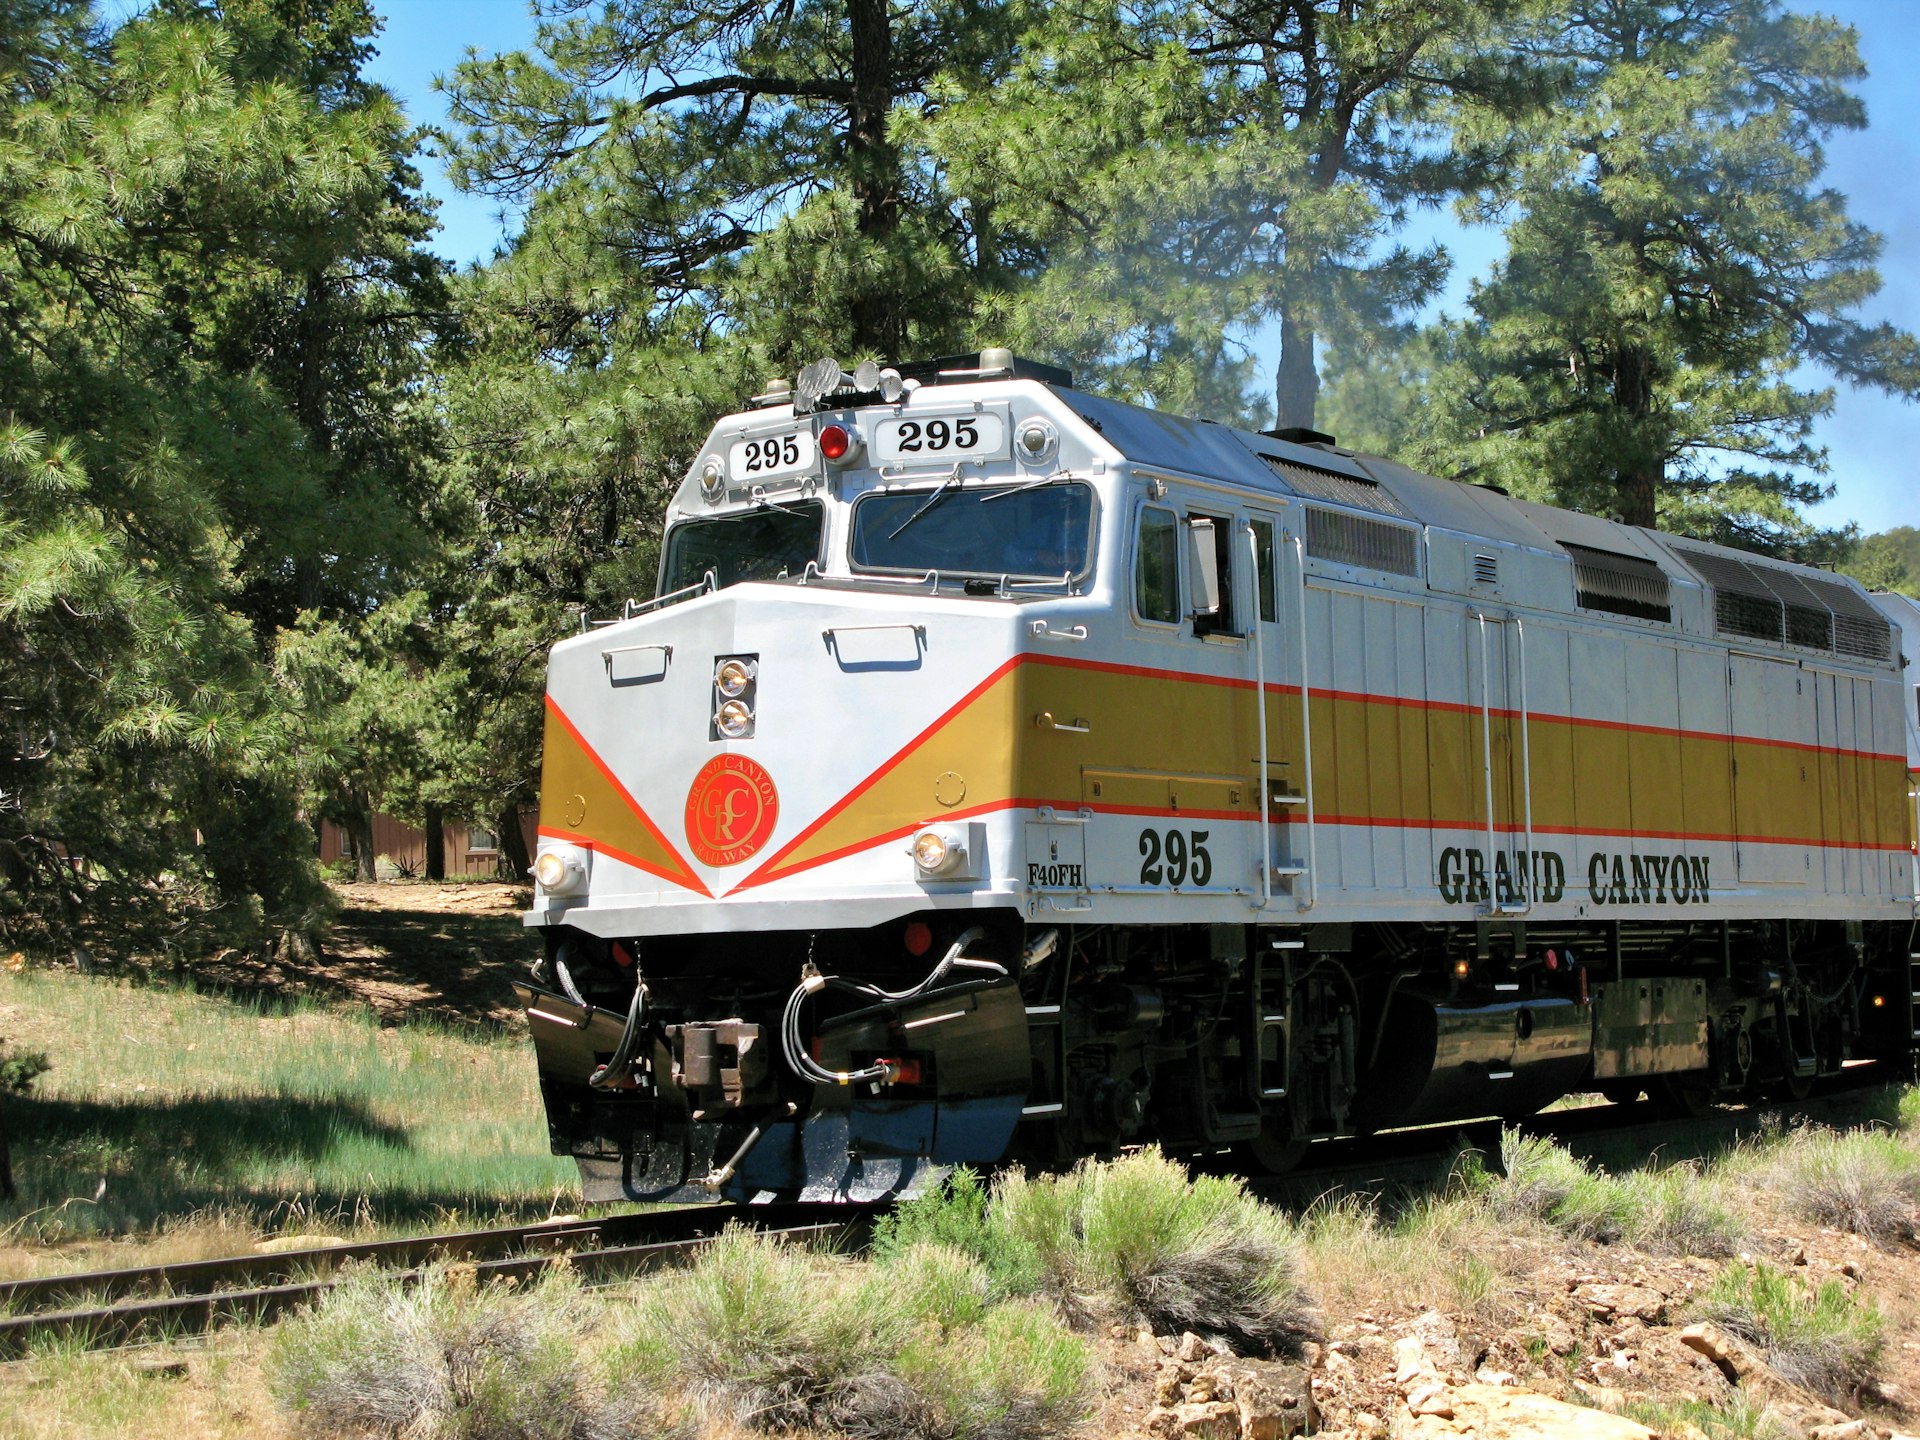 The Grand Canyon Railroad enters Grand Canyon National Park, Arizona, USA